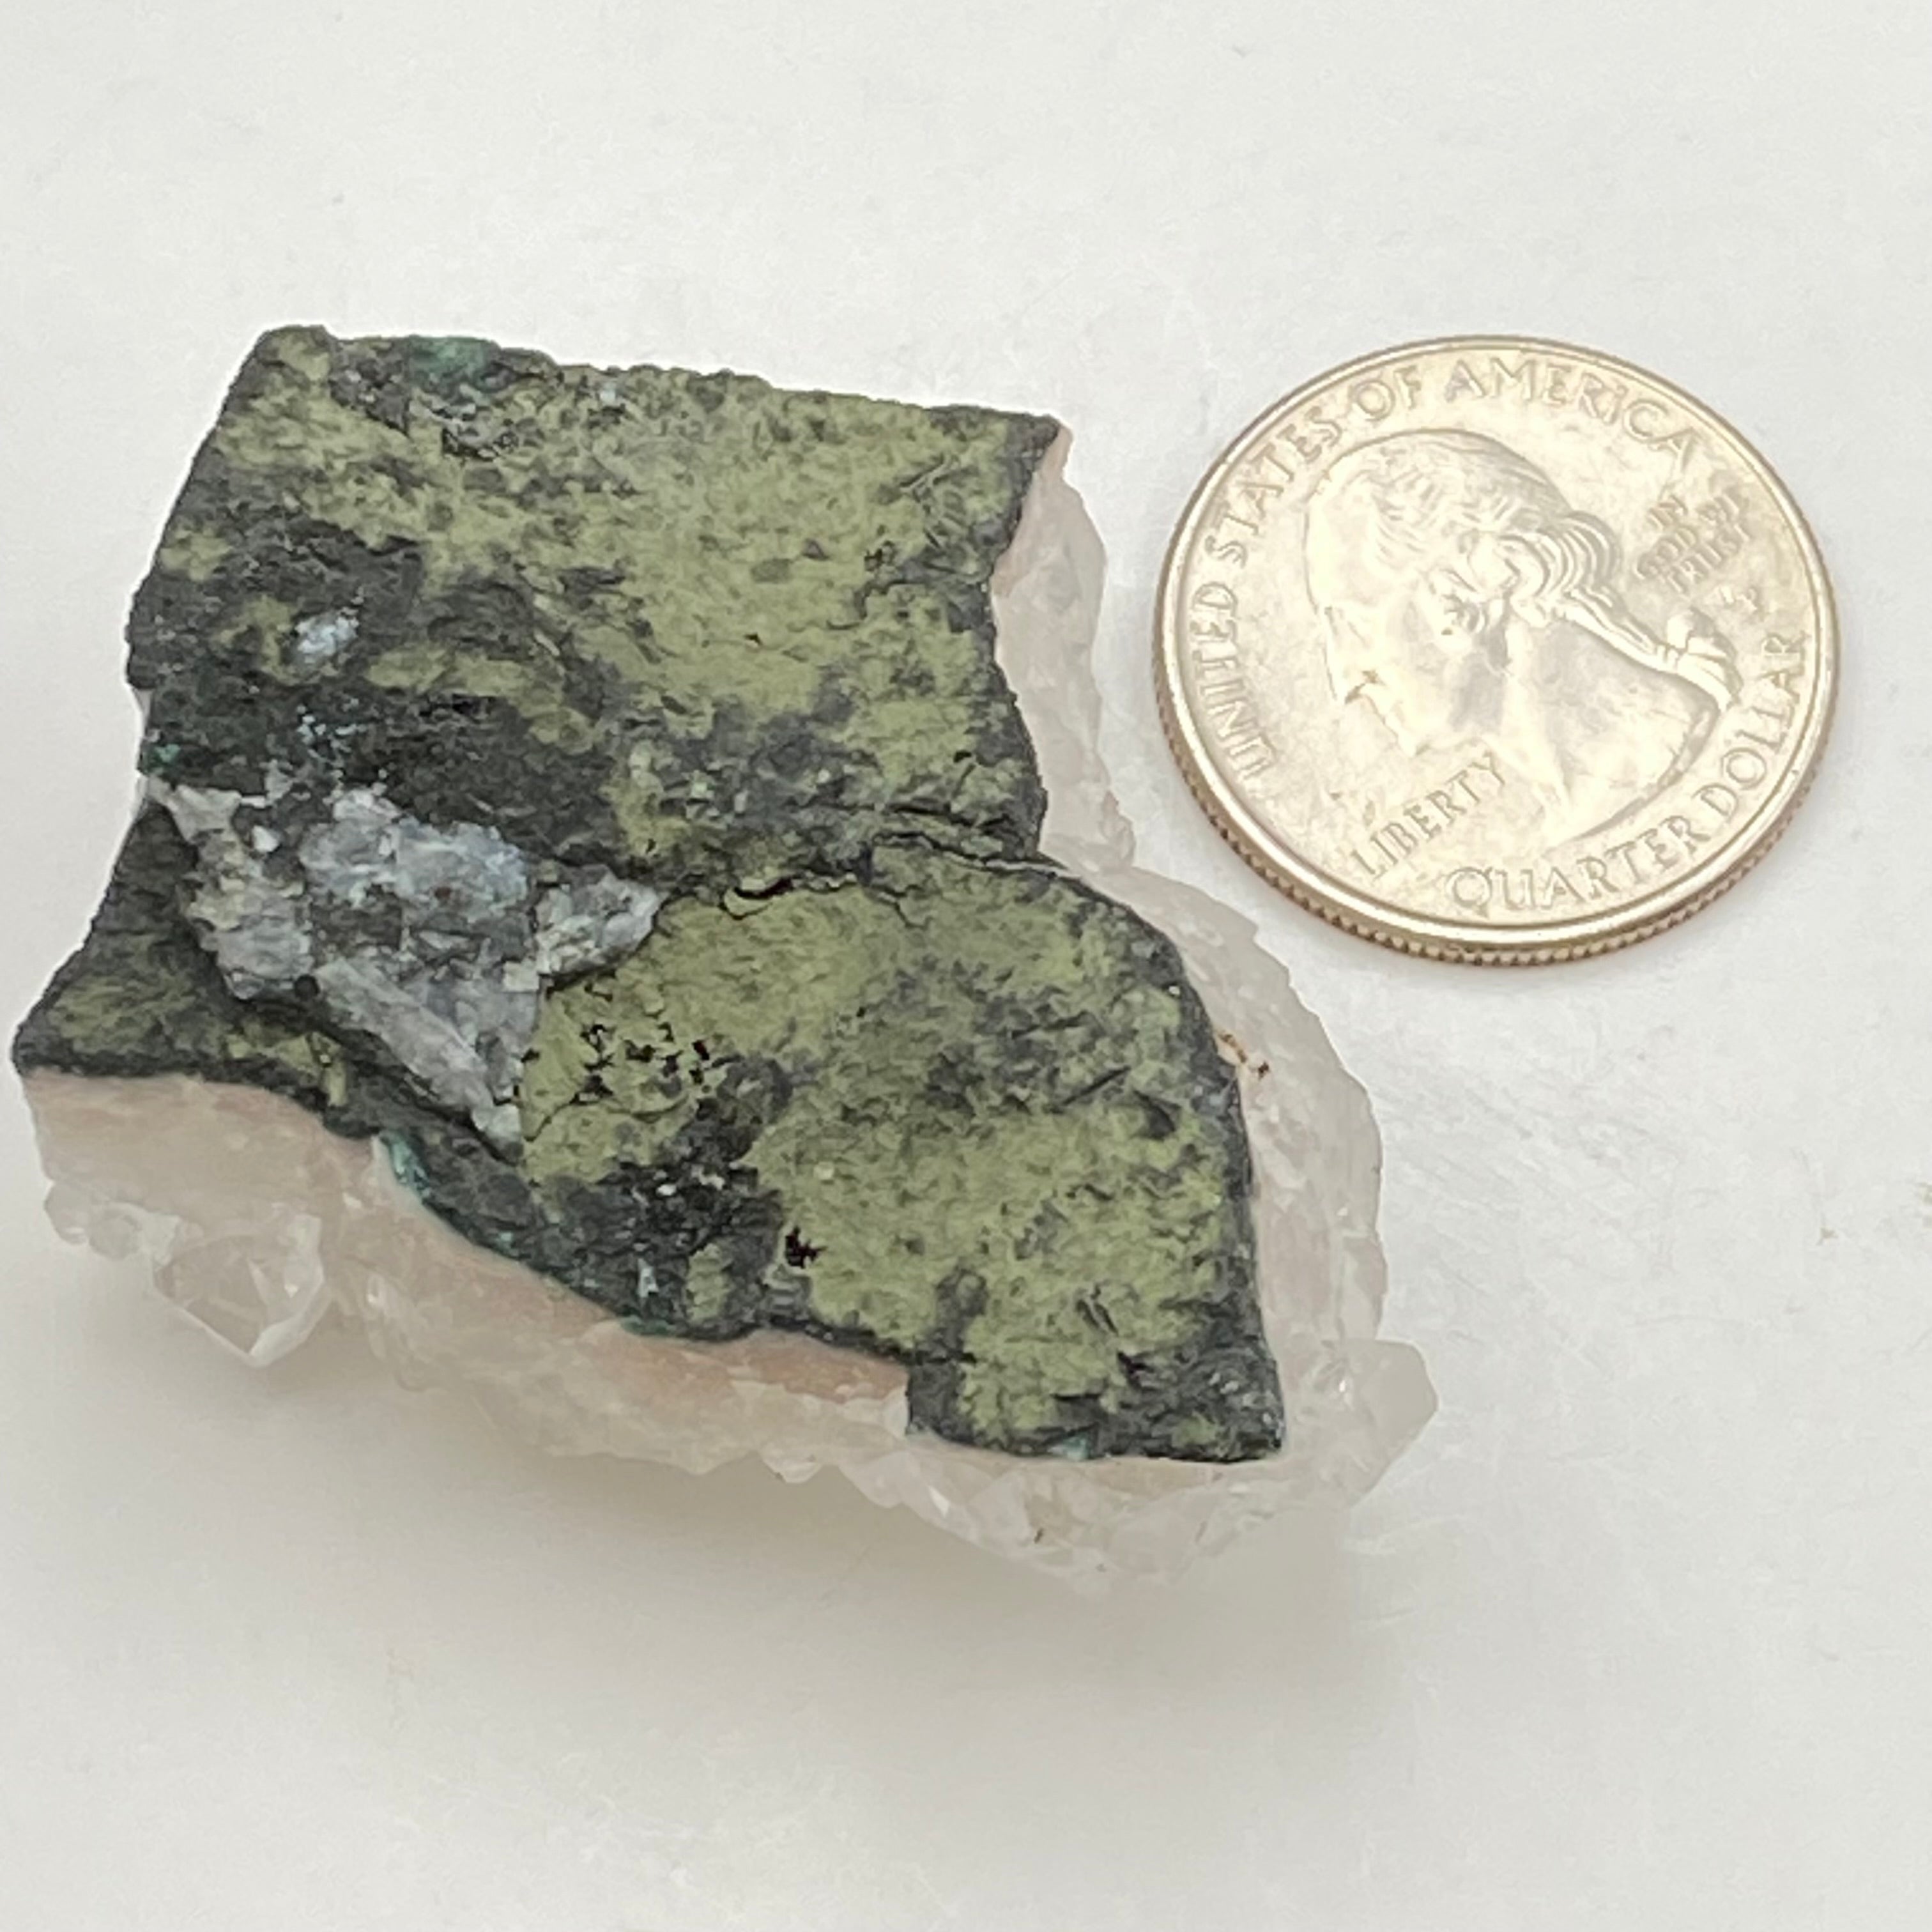 Apophyllite Crystal - 124